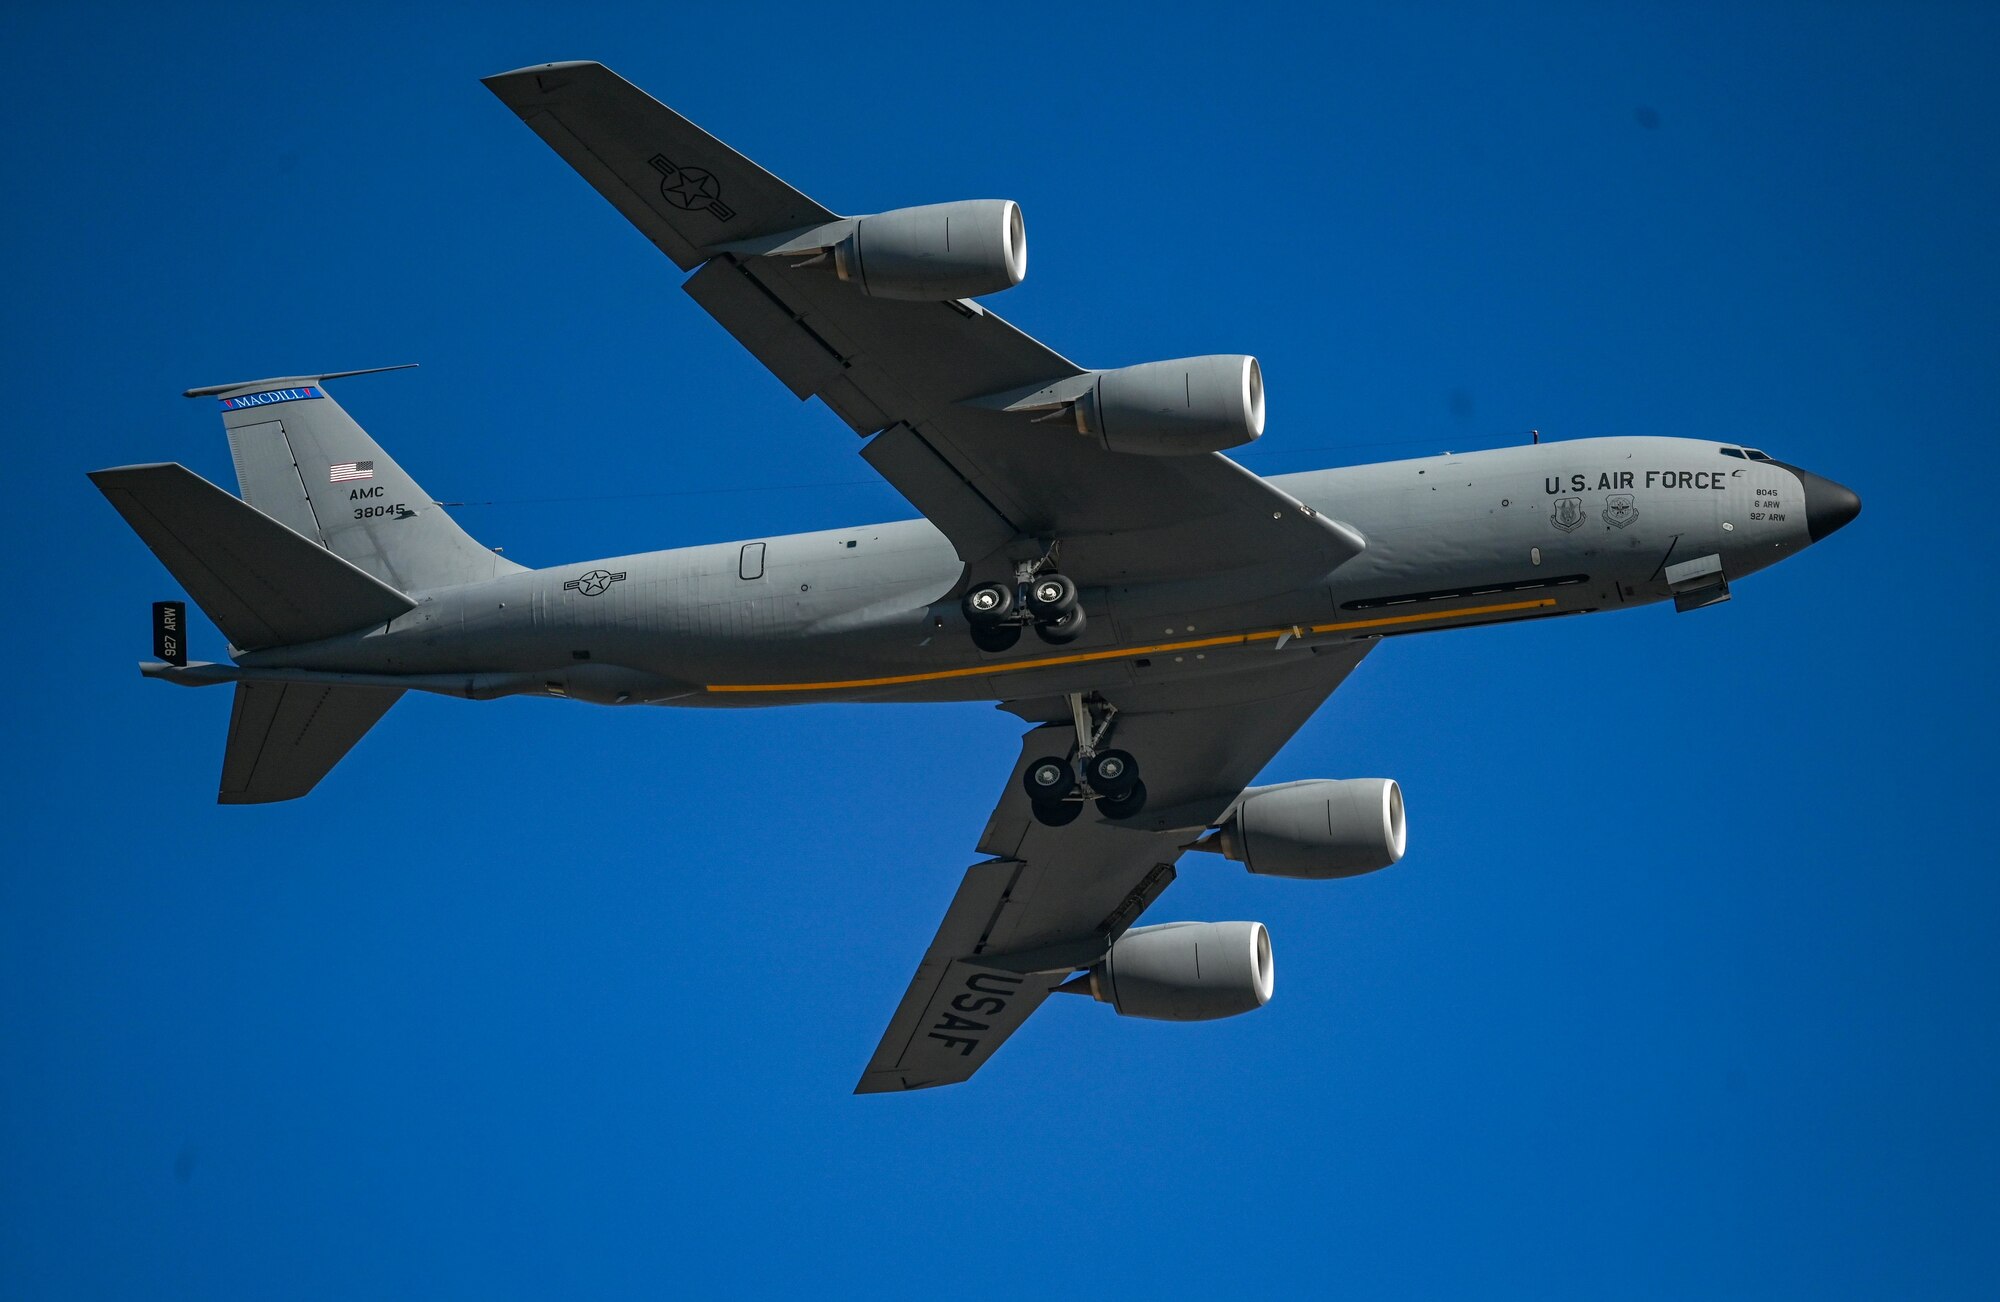 KC-135s assigned to the 6th Air Refueling Wing at MacDill Air Force Base, Florida, land at Tinker Air Force Base, Oklahoma, November 11, 2022 ahead of Hurricane Nicole making landfall.